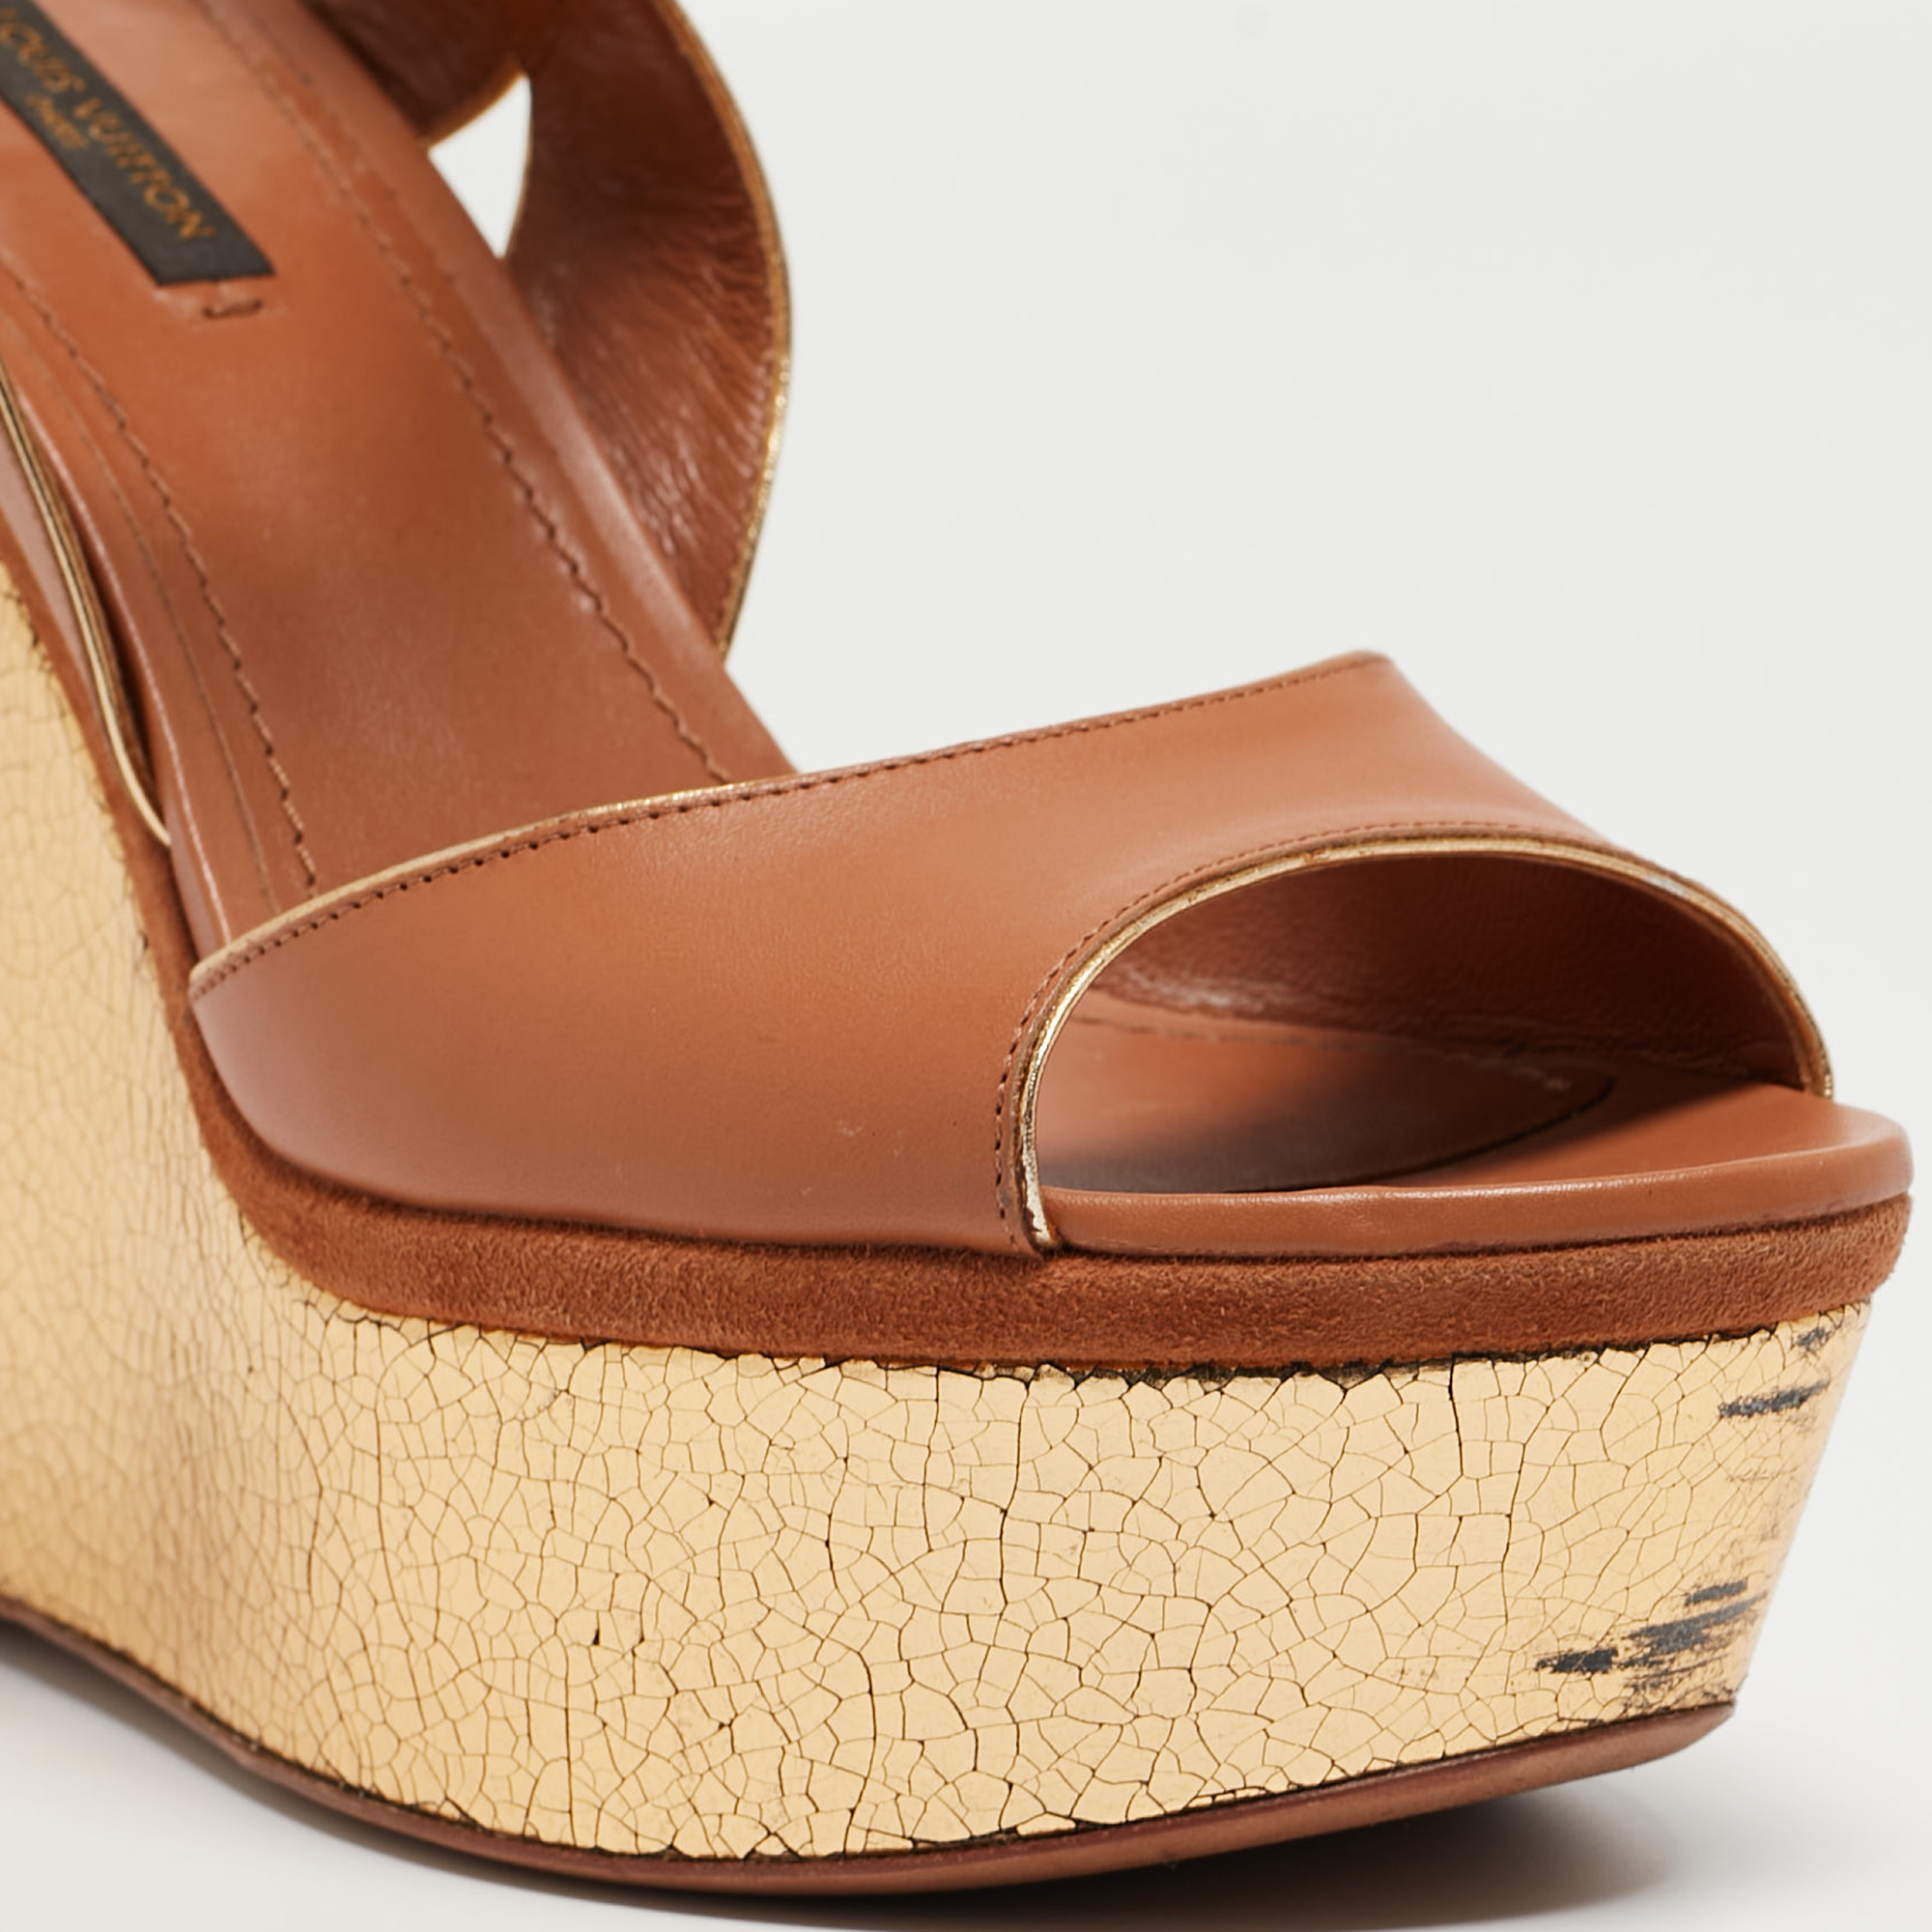 Louis Vuitton Beige Leather Wedge Sandals Size 38